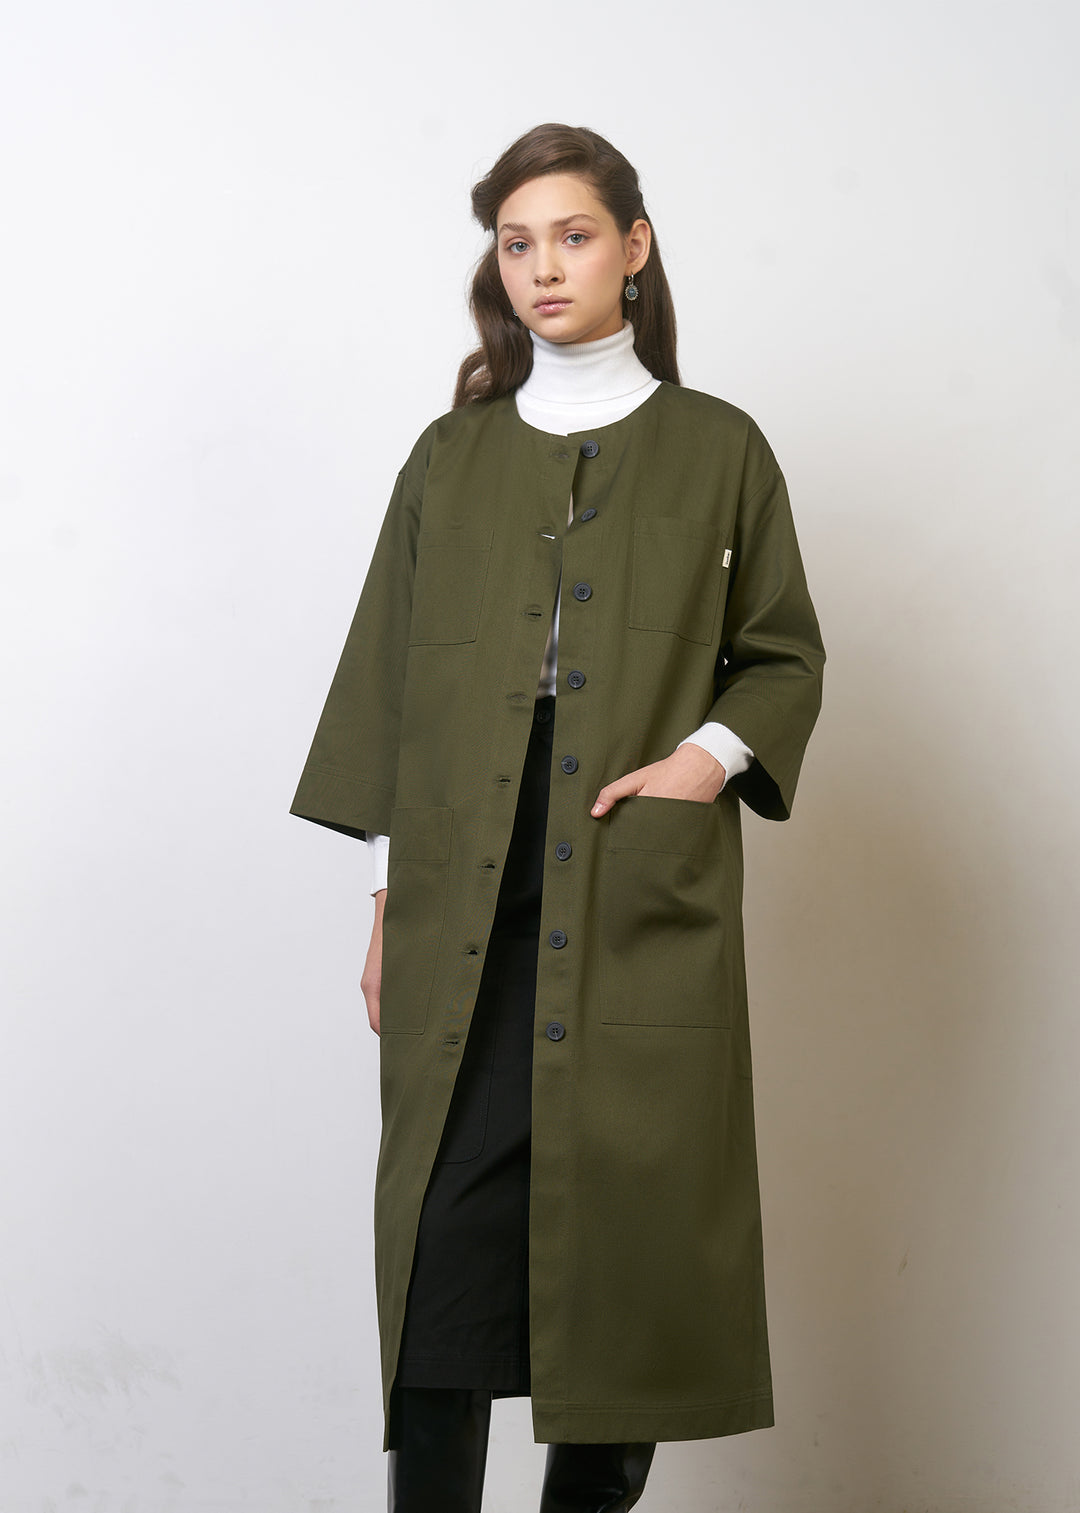 Minimalistic modern coats 